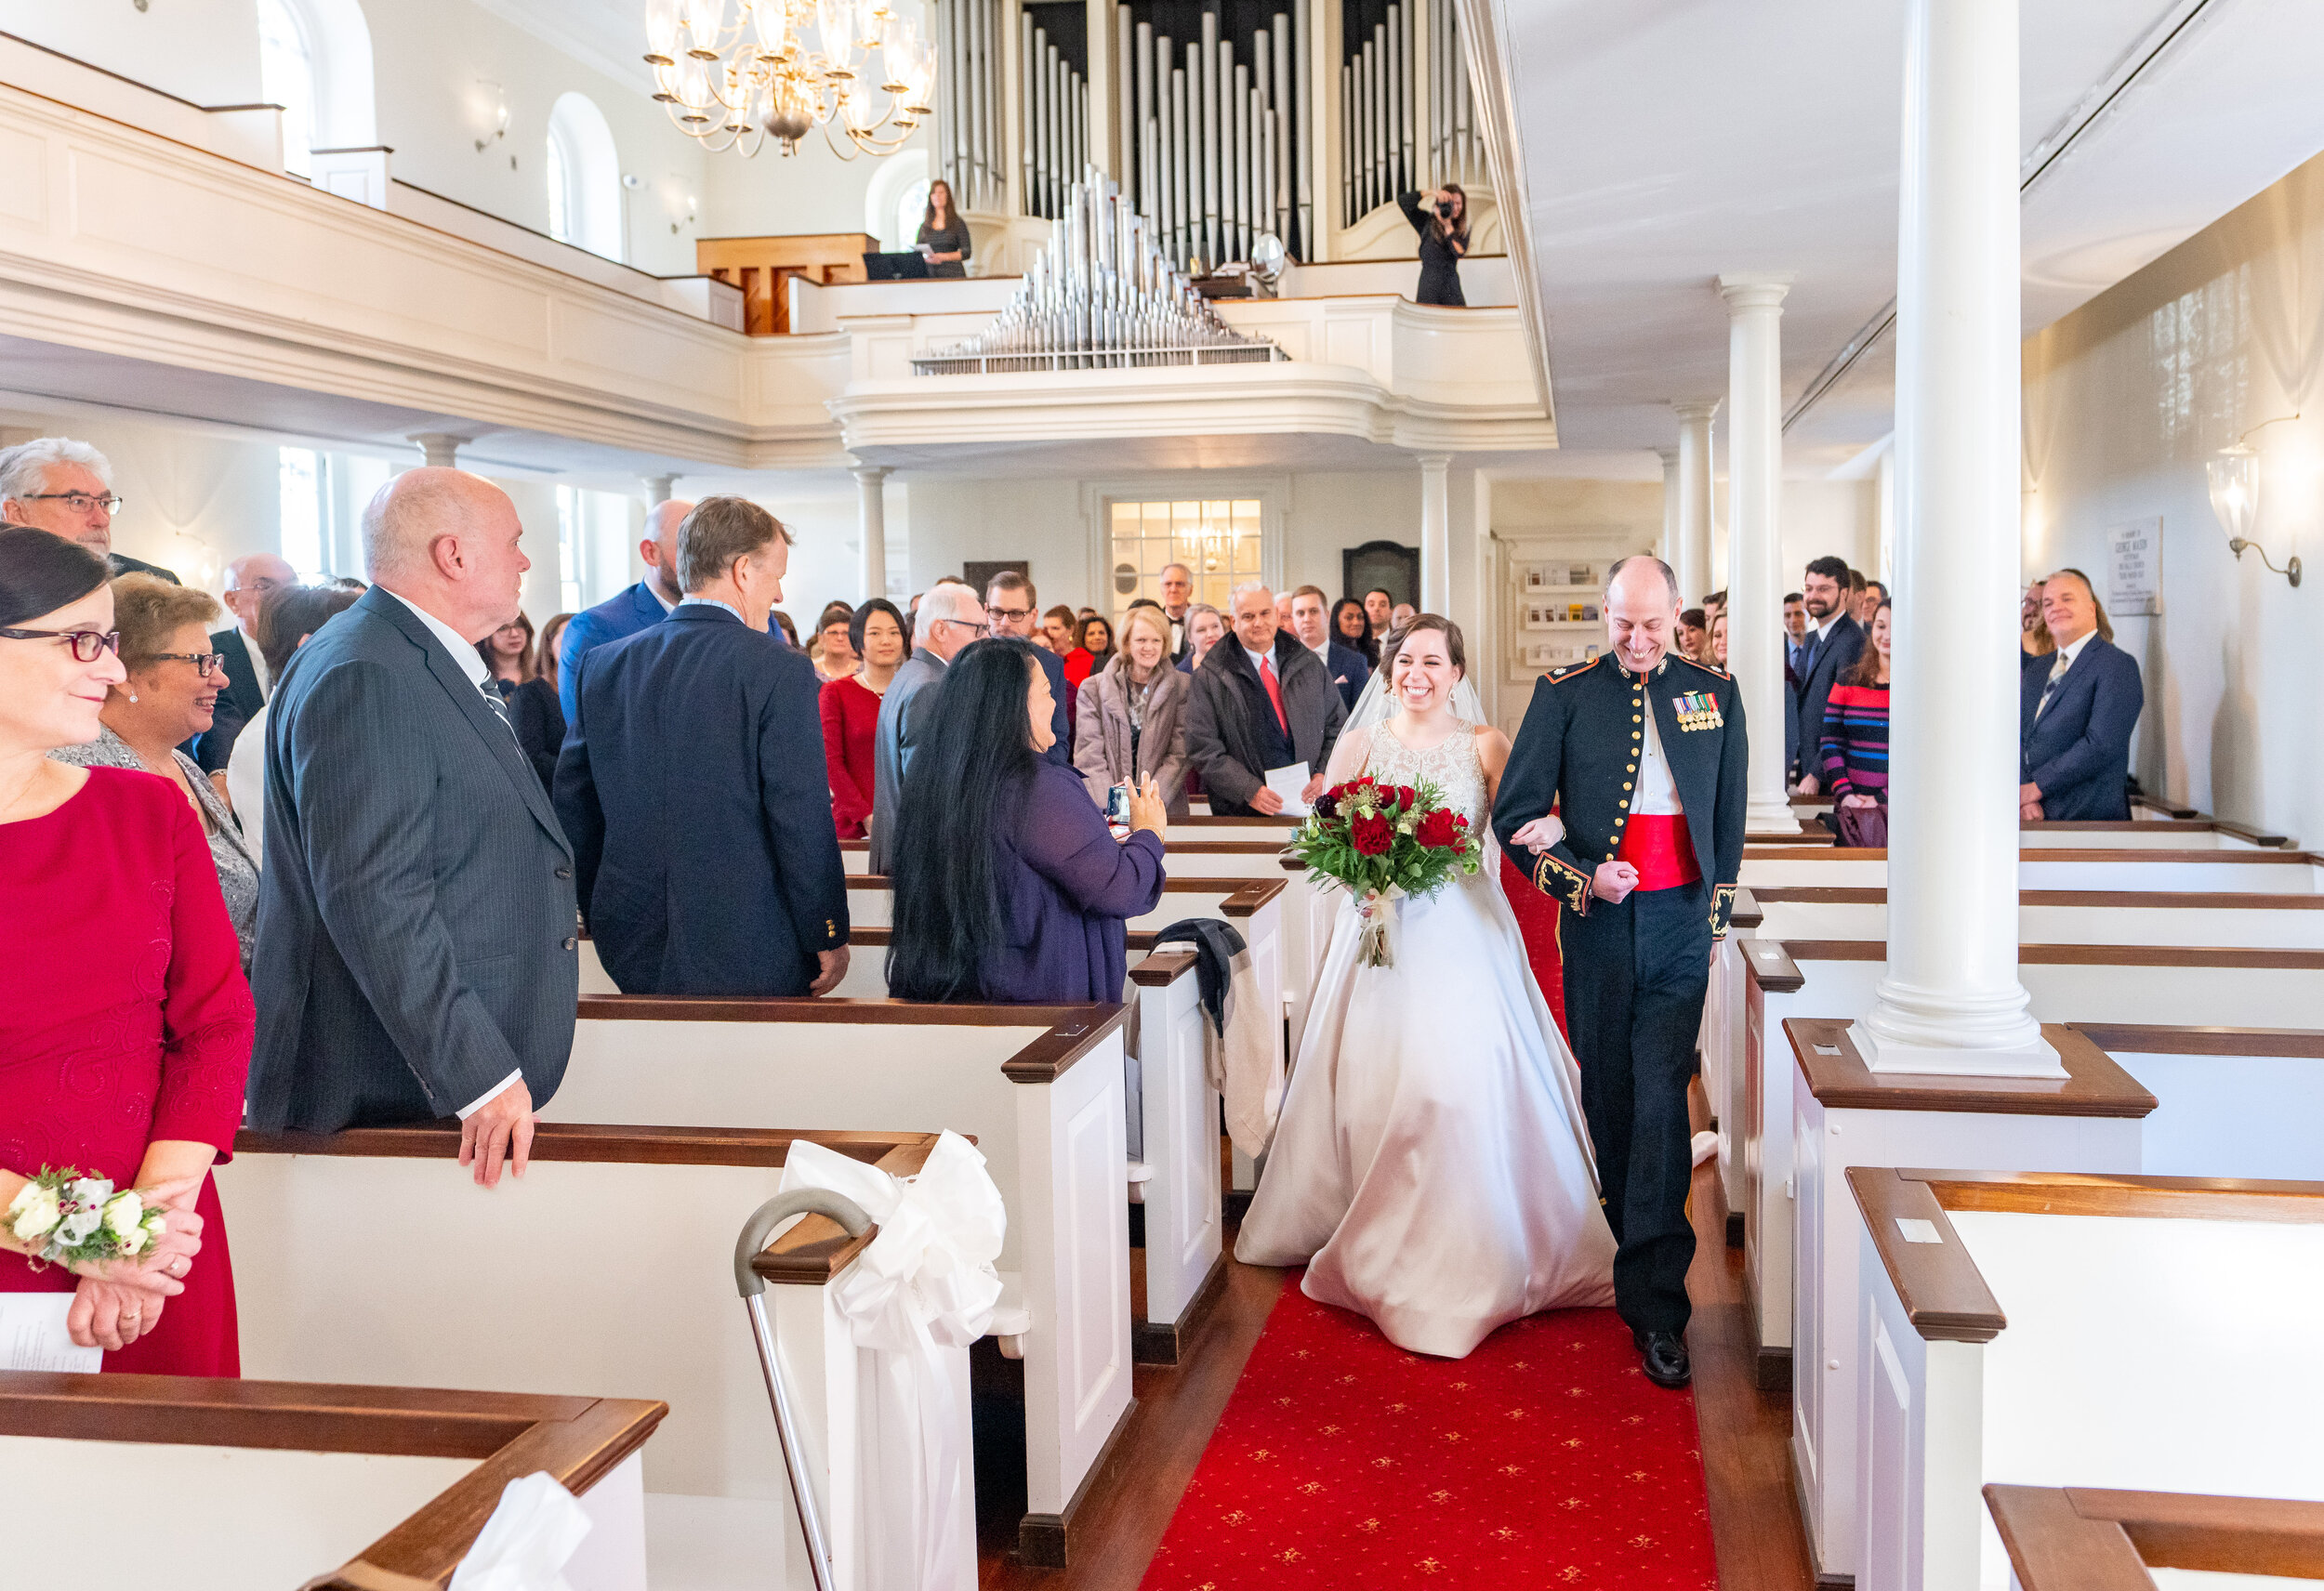 Father walking bride down the aisle at falls church episcopal wedding